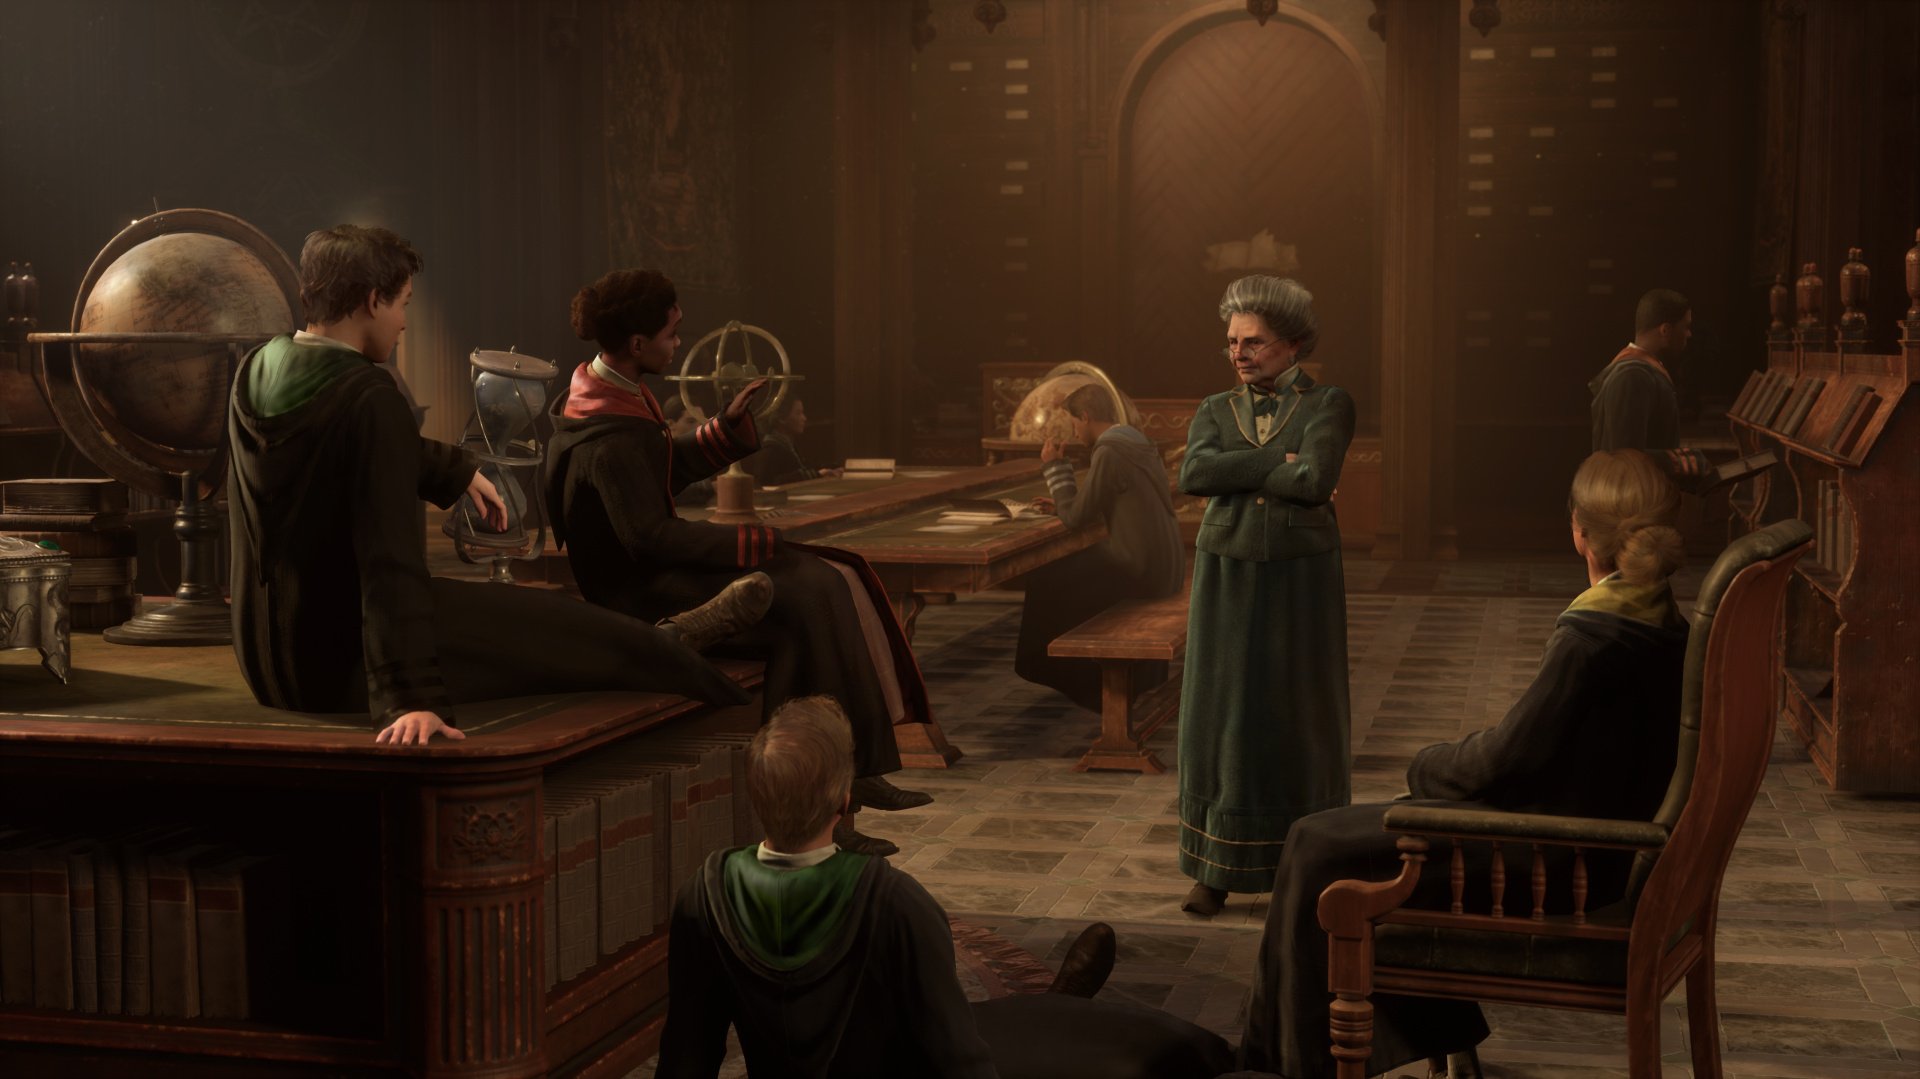 Hogwarts Legacy Deluxe Edition - Pc Steam Offline!! - DFG